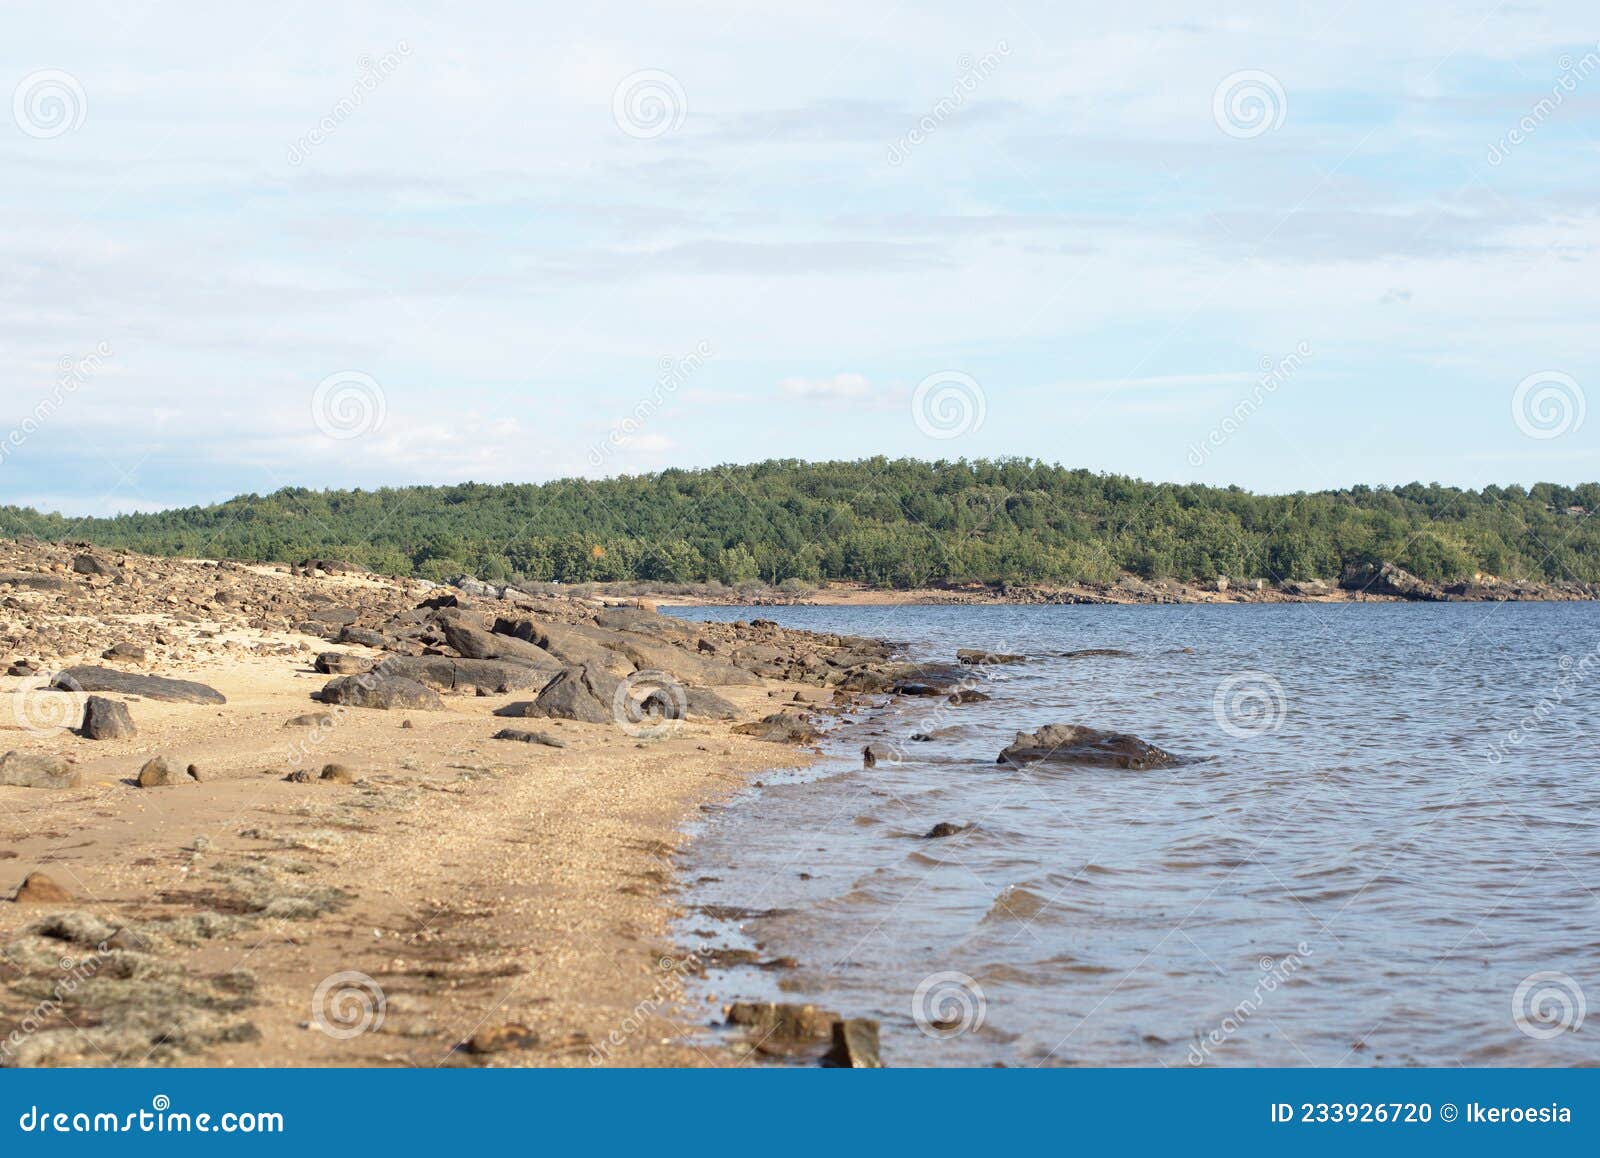 cuerda del pozo reservoir, shore full of rocks and water.